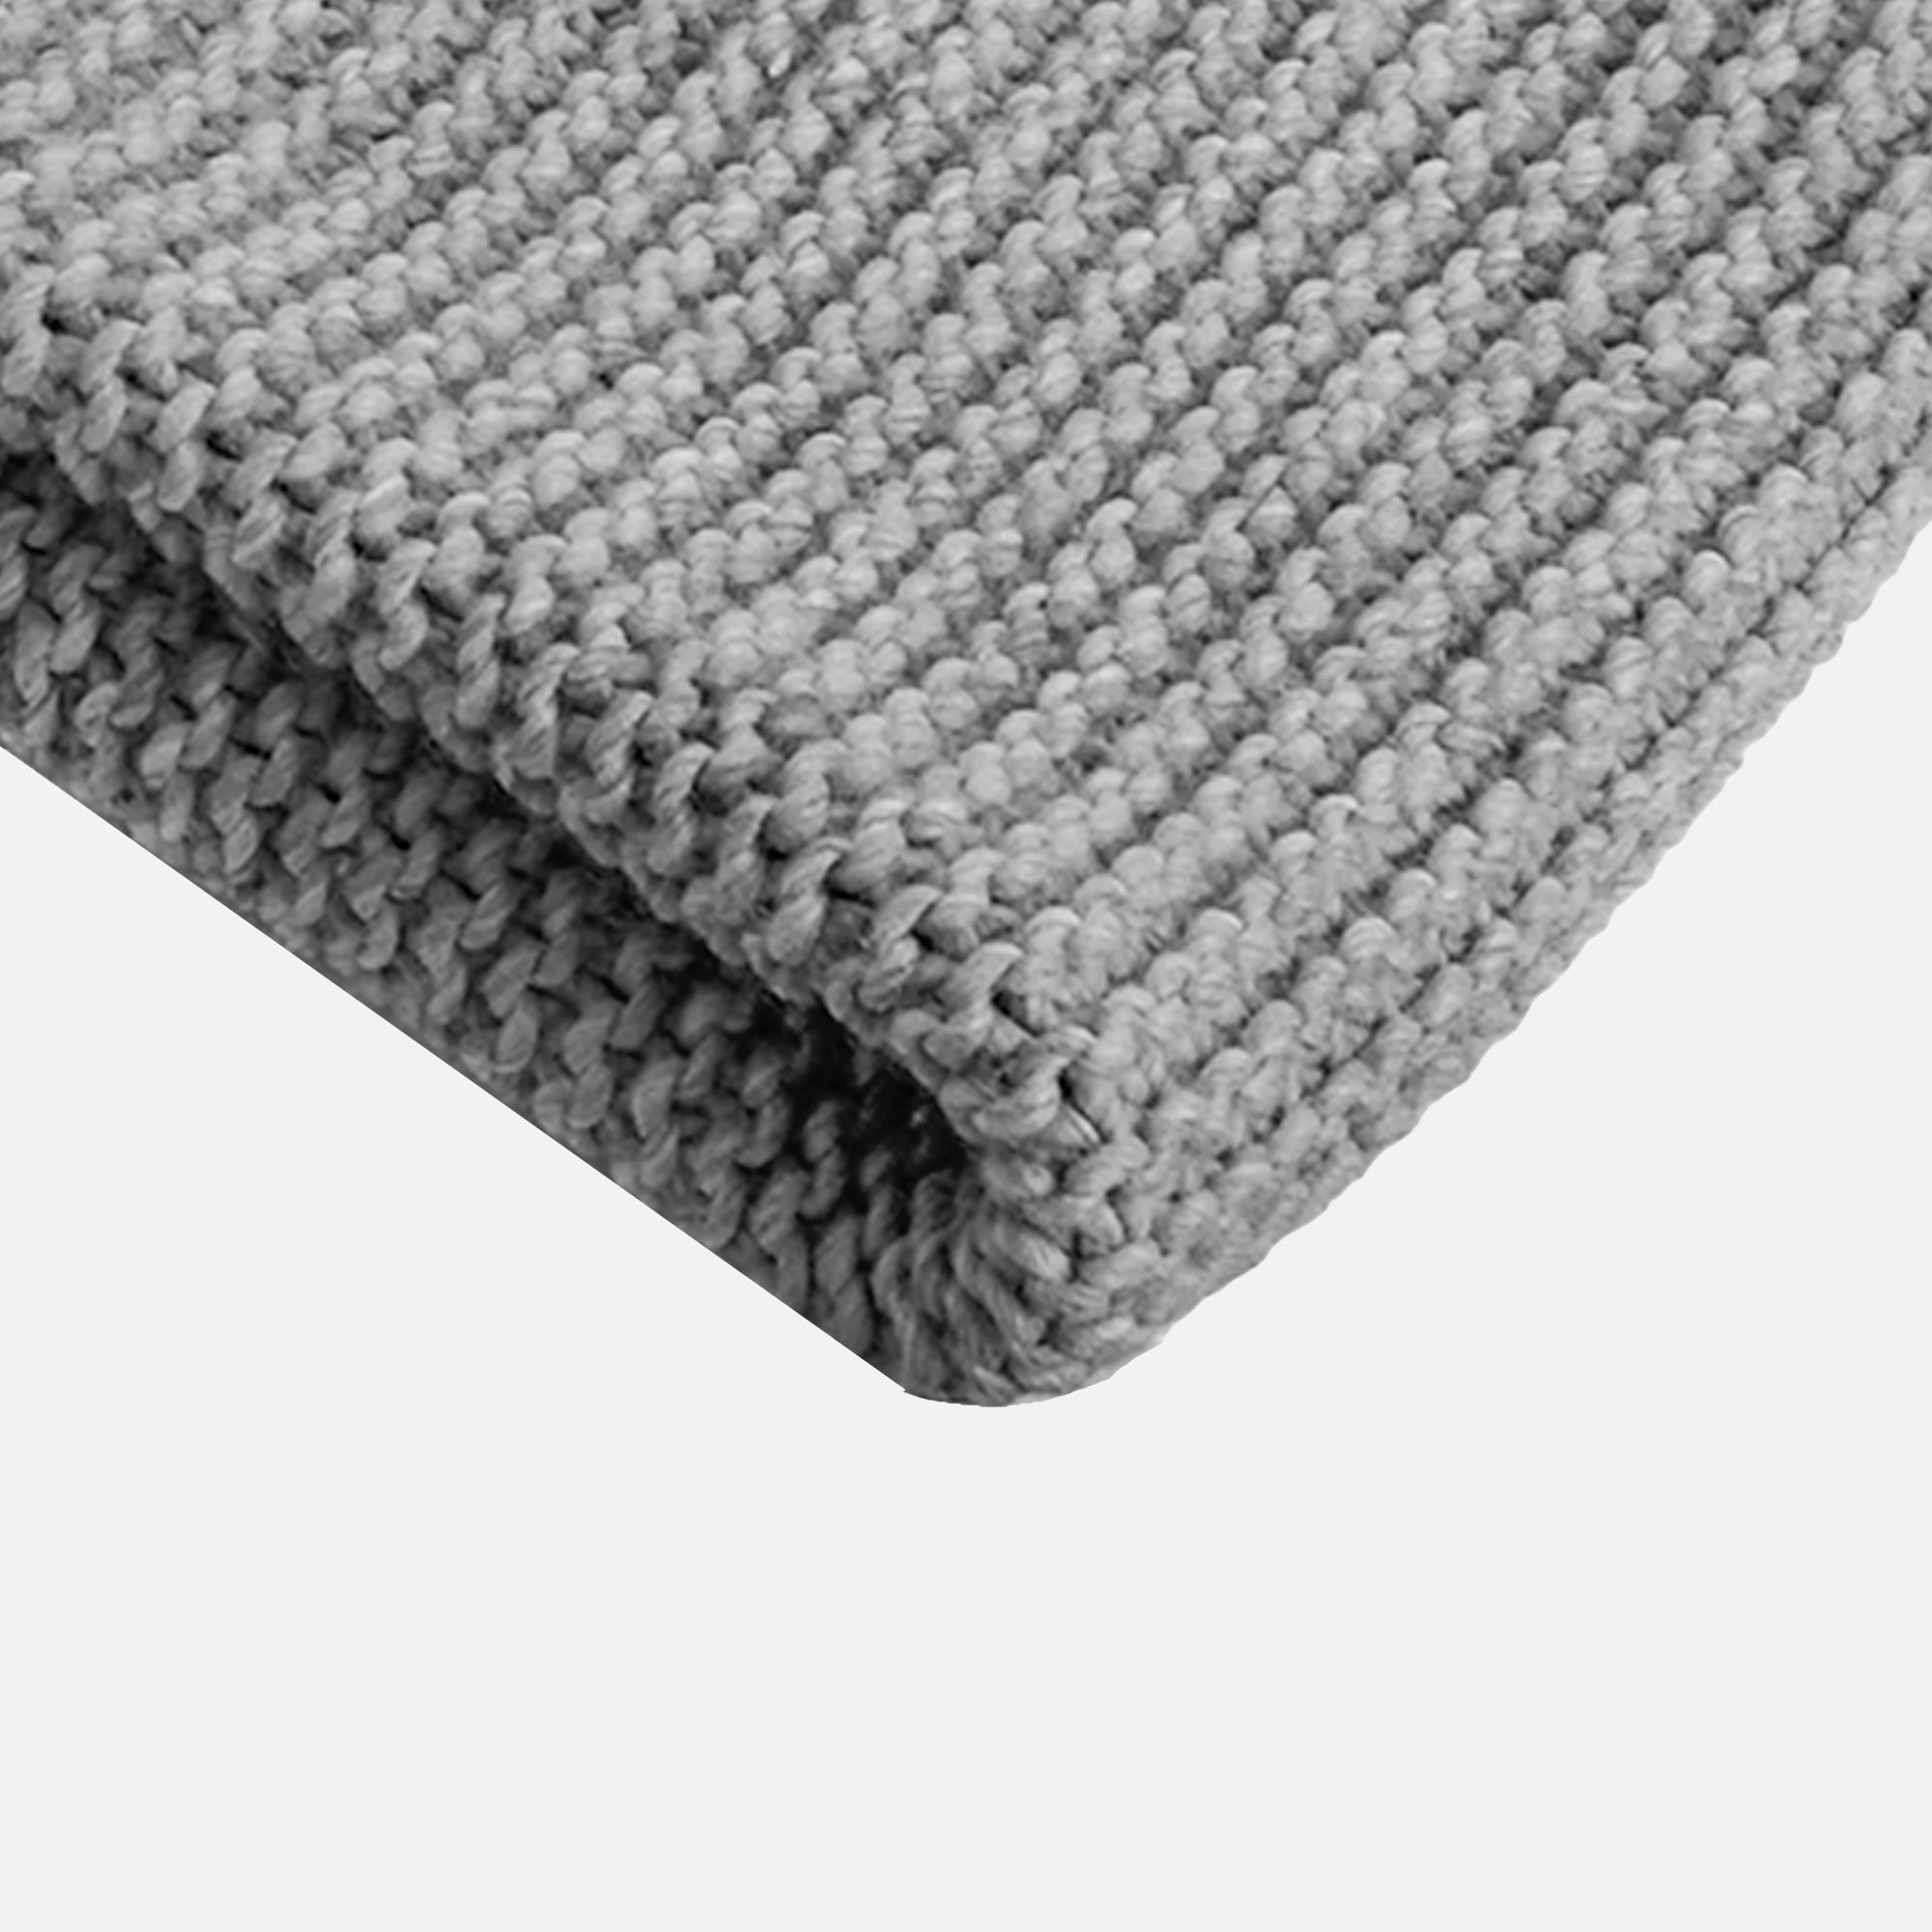 Foulard tube tricot gris